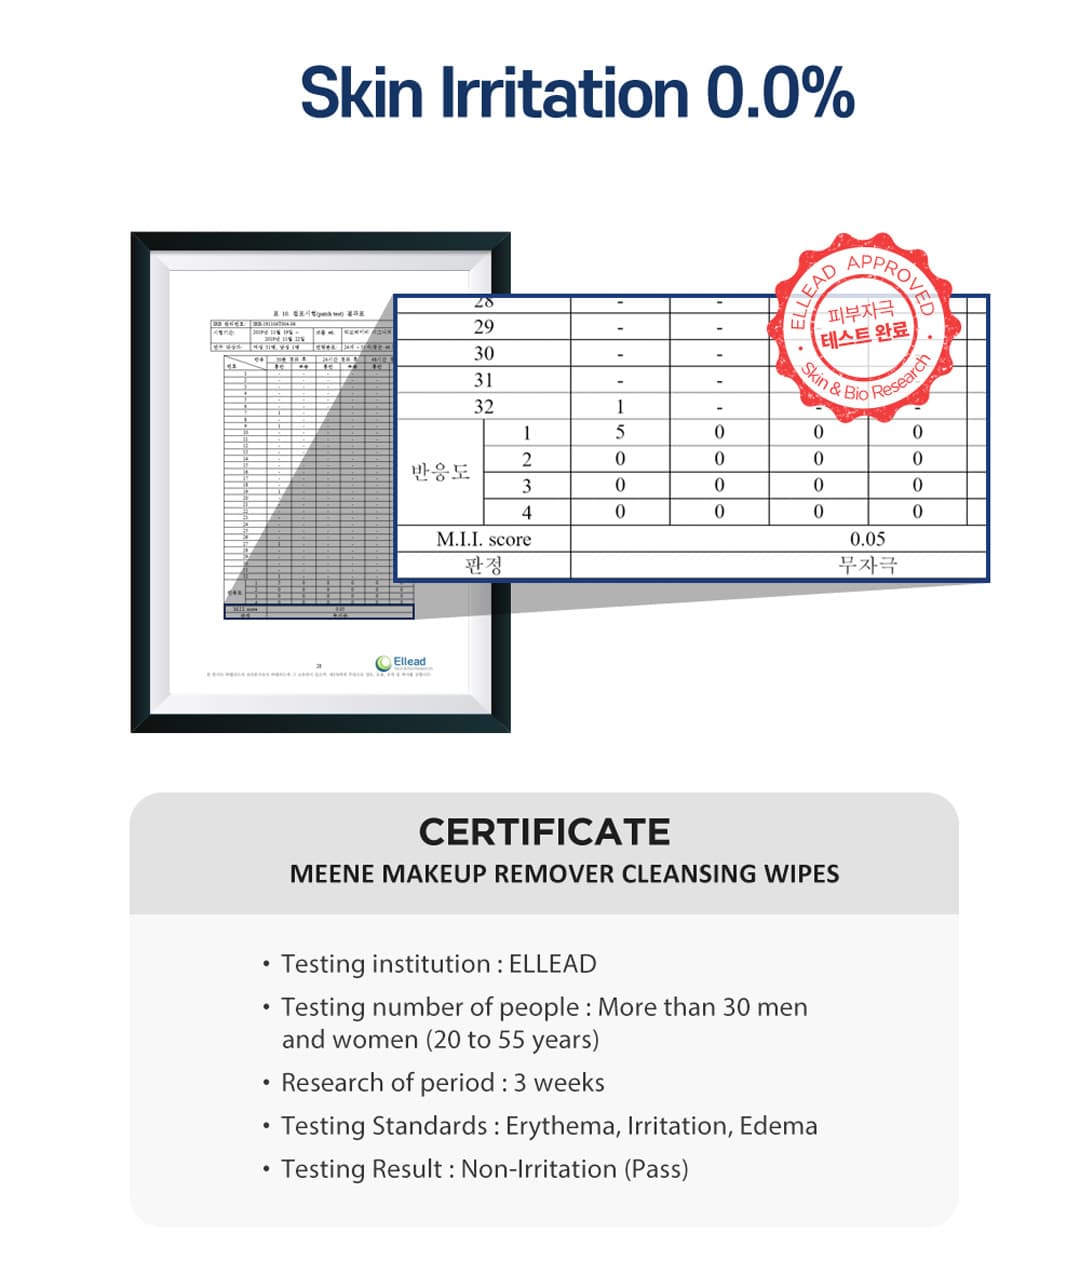 No Skin Irritation Certified by ELLEAD